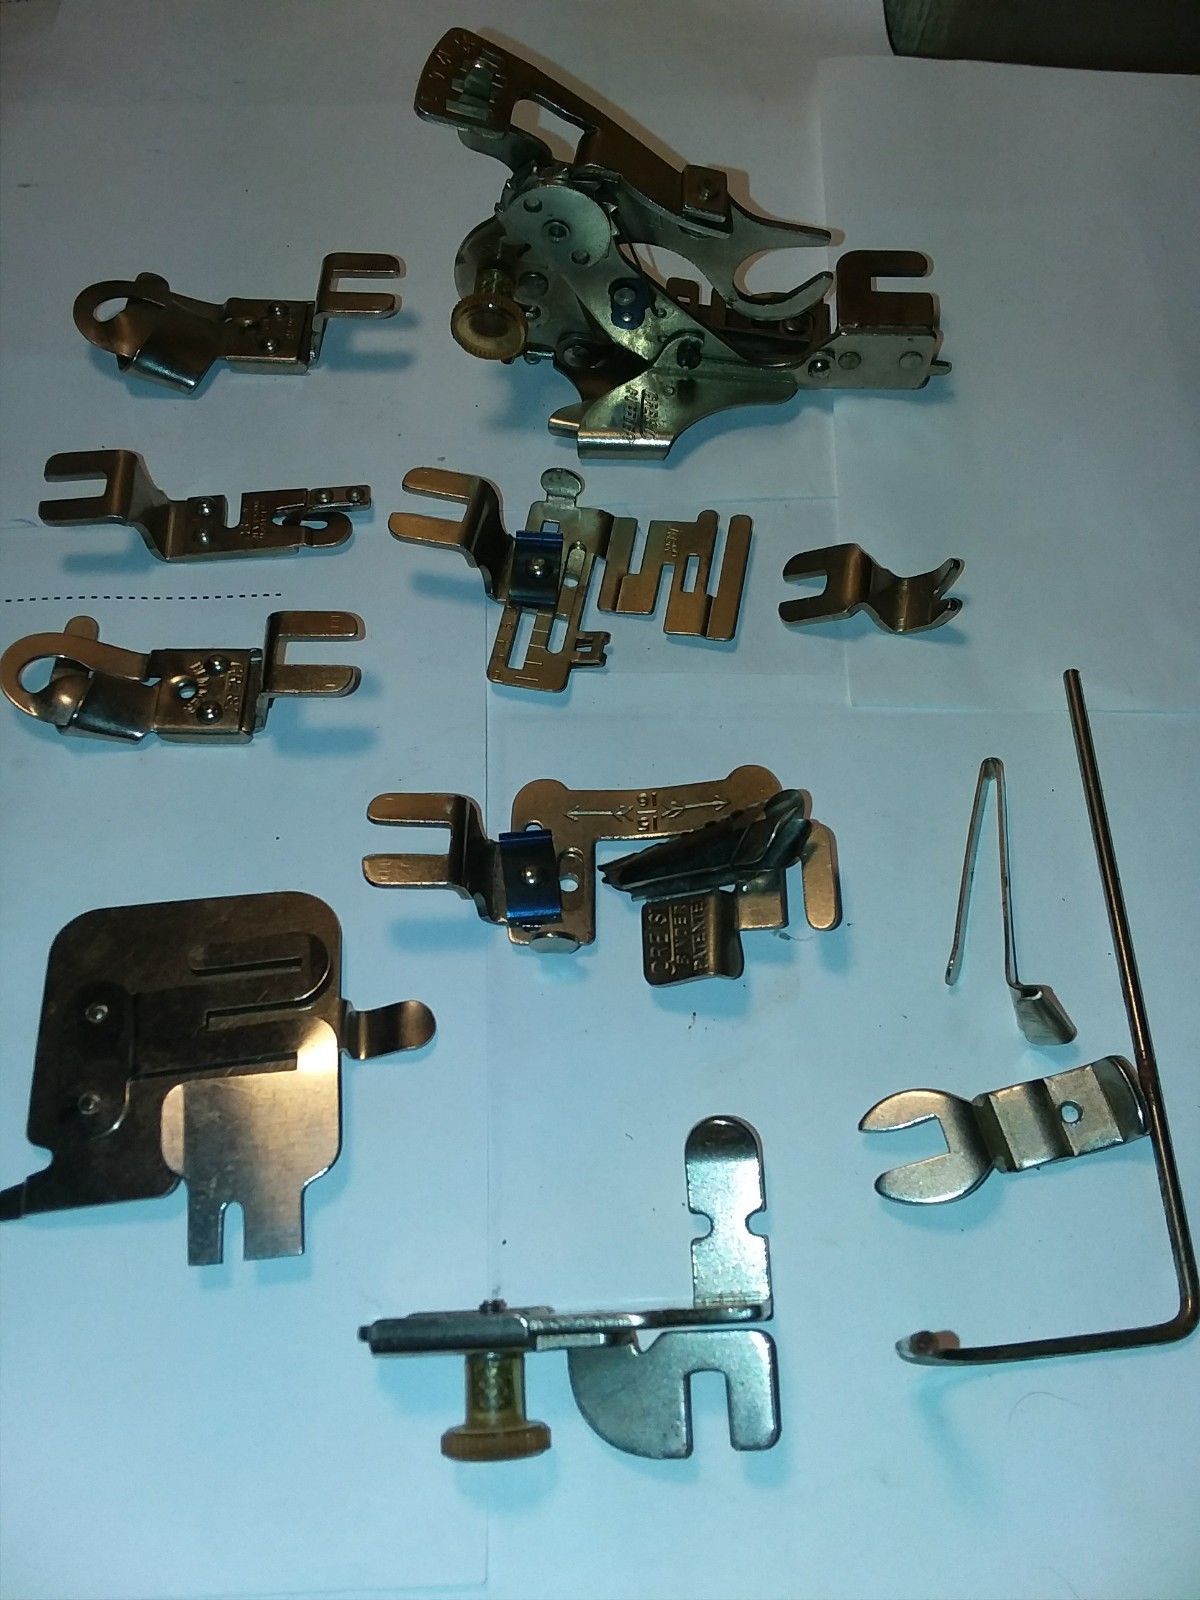 Greist sewing machine attachments,spare parts - $18.00